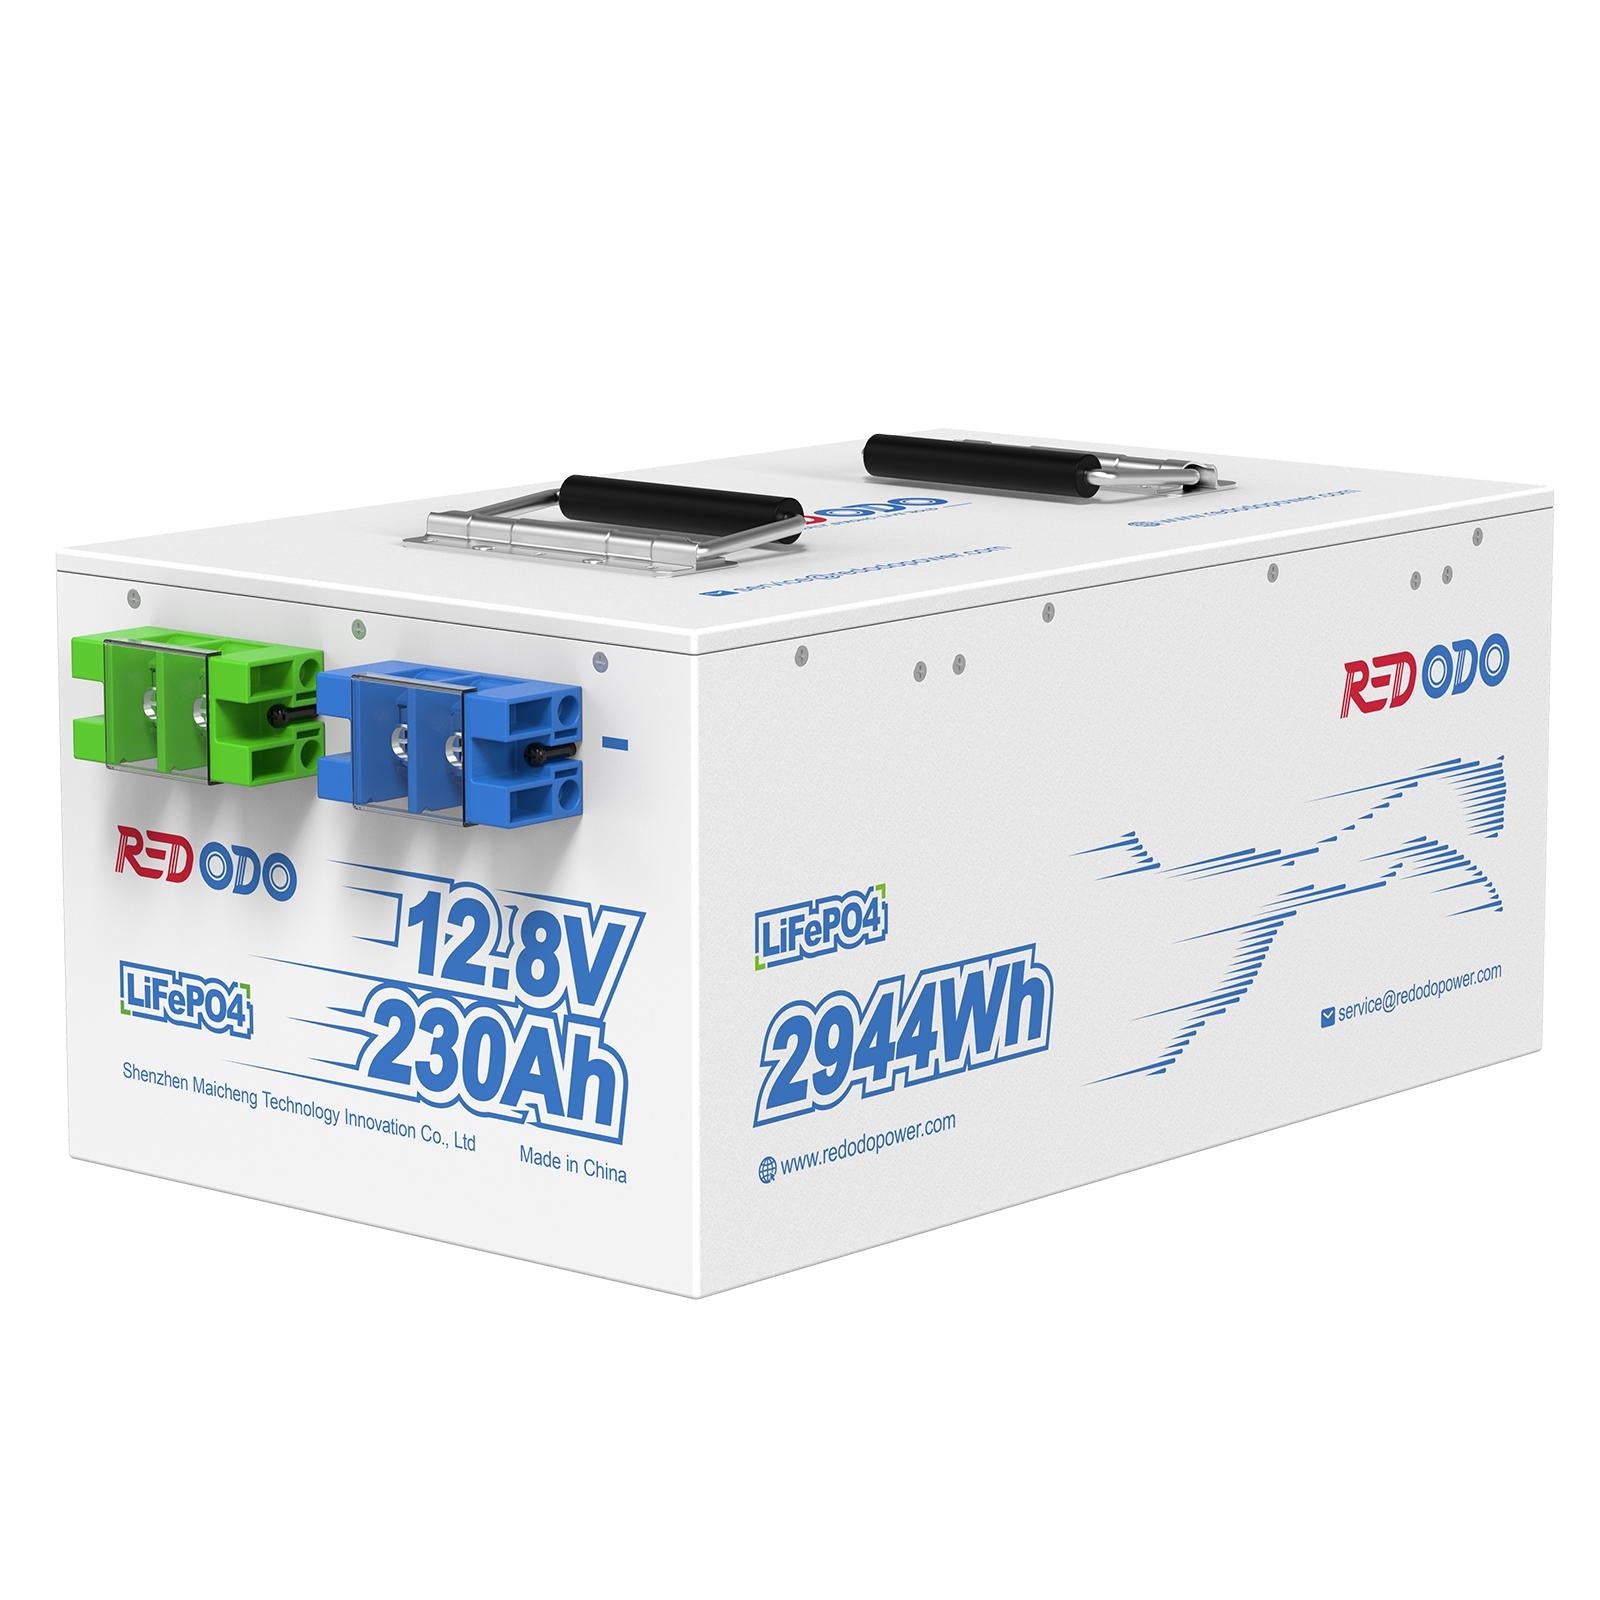 Redodo 12V 230Ah LiFePO4 Battery | 2.944kWh & 1.92kW Redodo Power